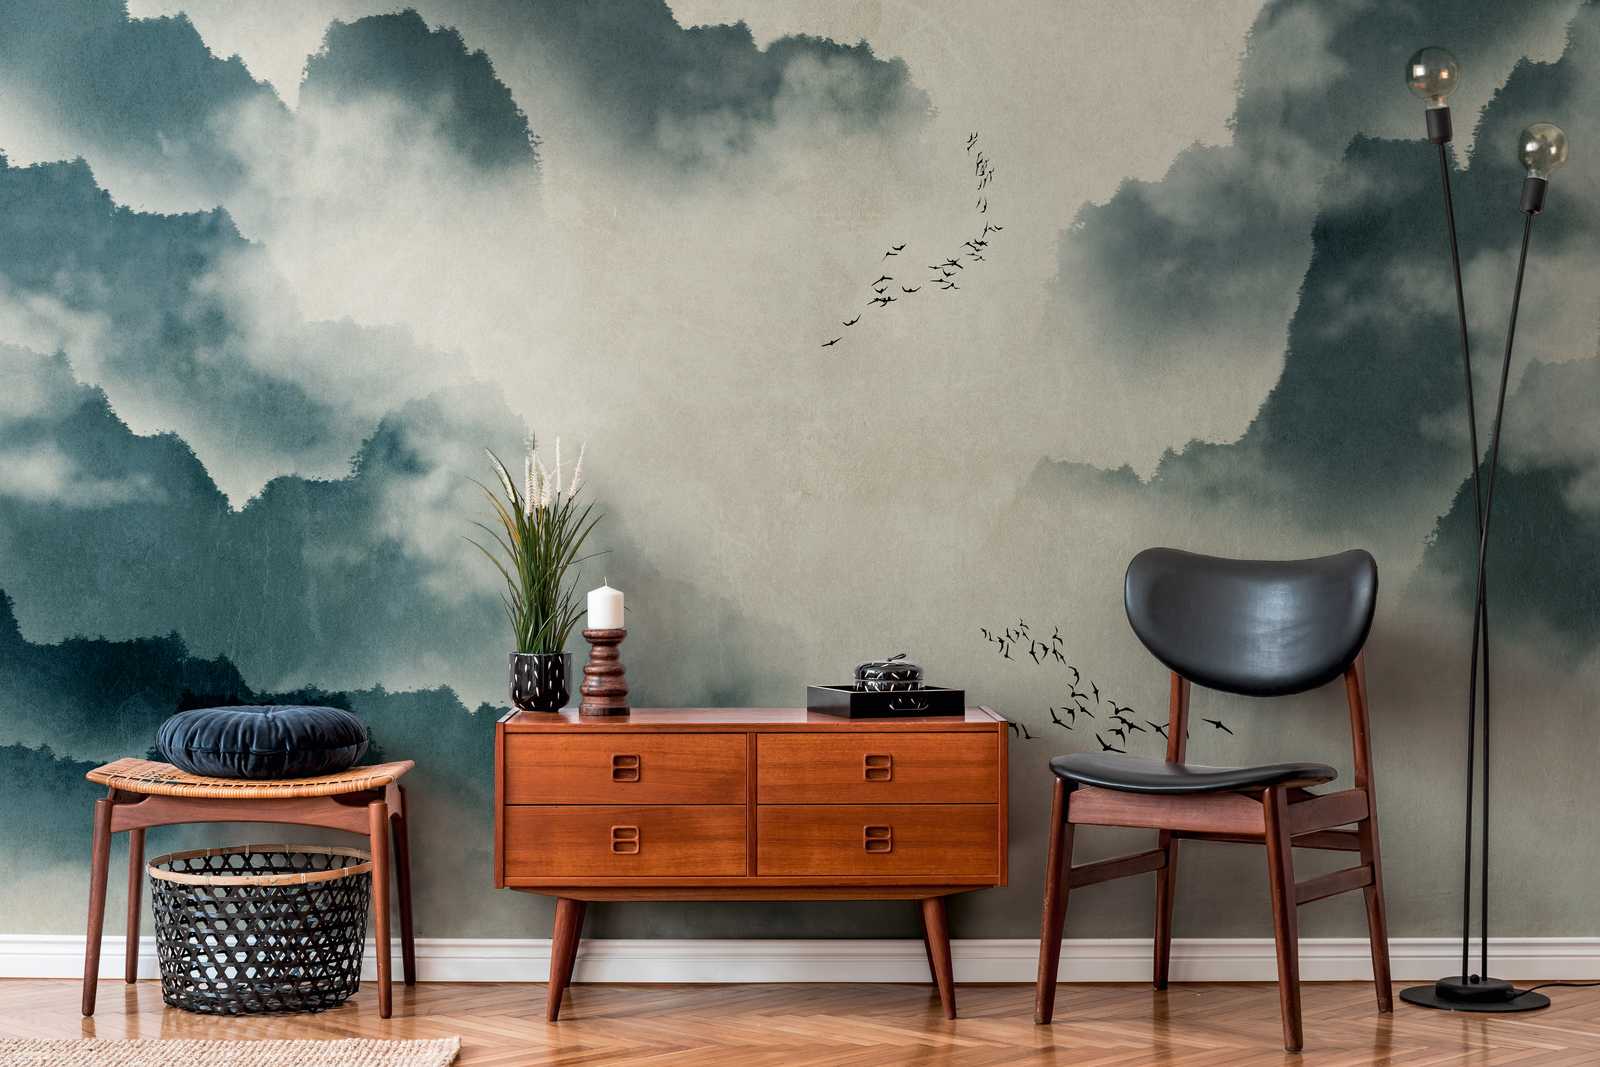             Wallpaper novelty | watercolour motif wallpaper with mountains, fog & flock of birds
        